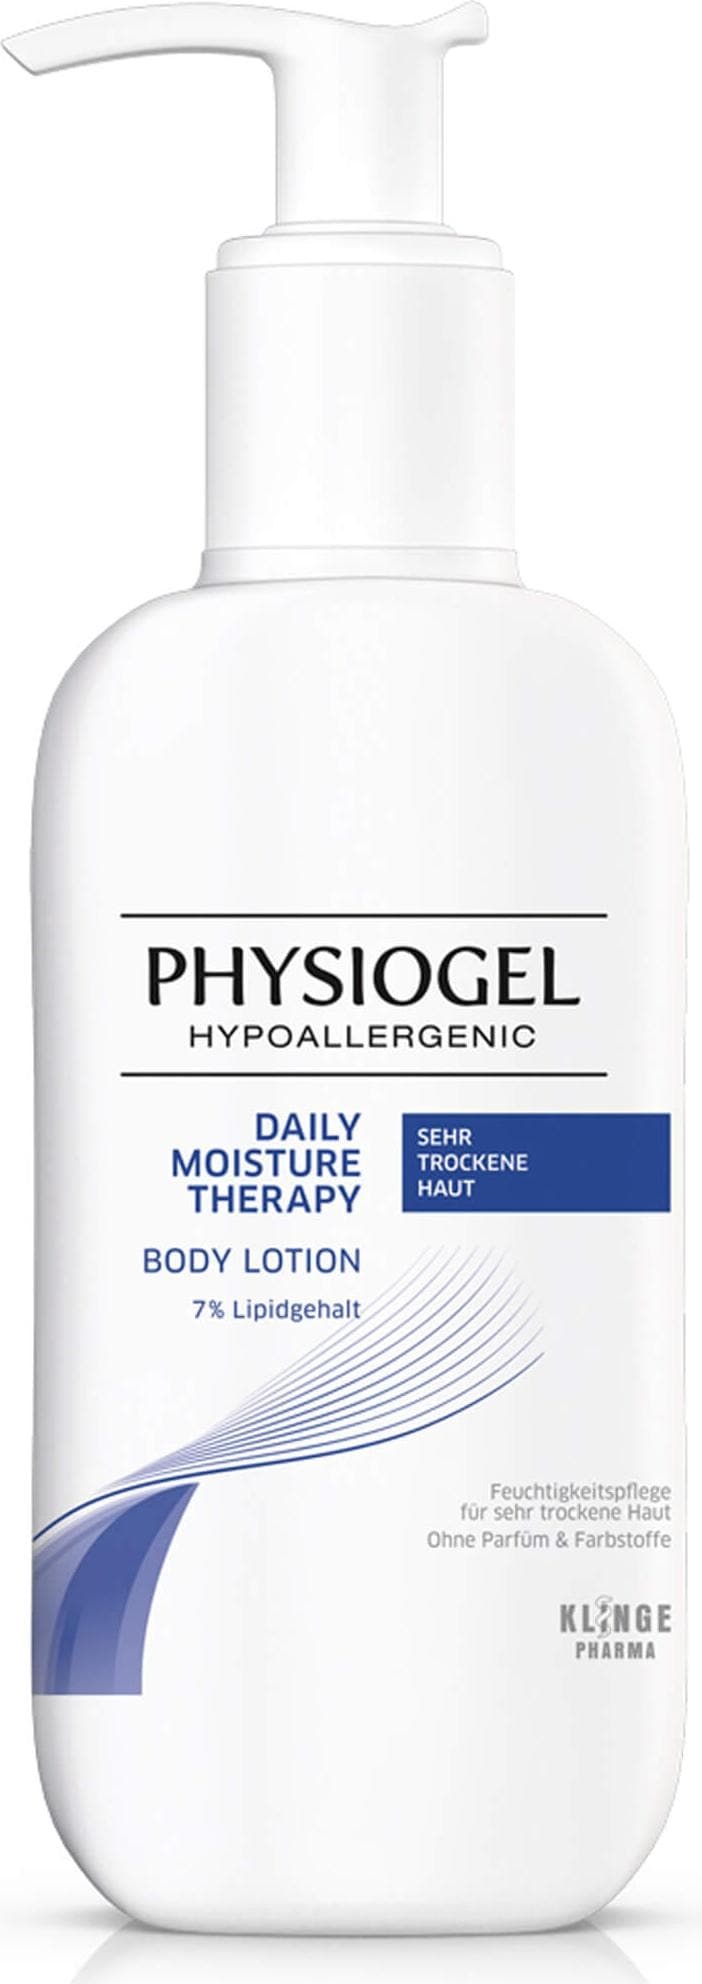 Klinge Pharma, Bodylotion, PHYSIOGEL Daily Moisture Therapy Body Lotion für sehr trockene Haut, 400 ml LOT (Körperlotion, 400 ml)